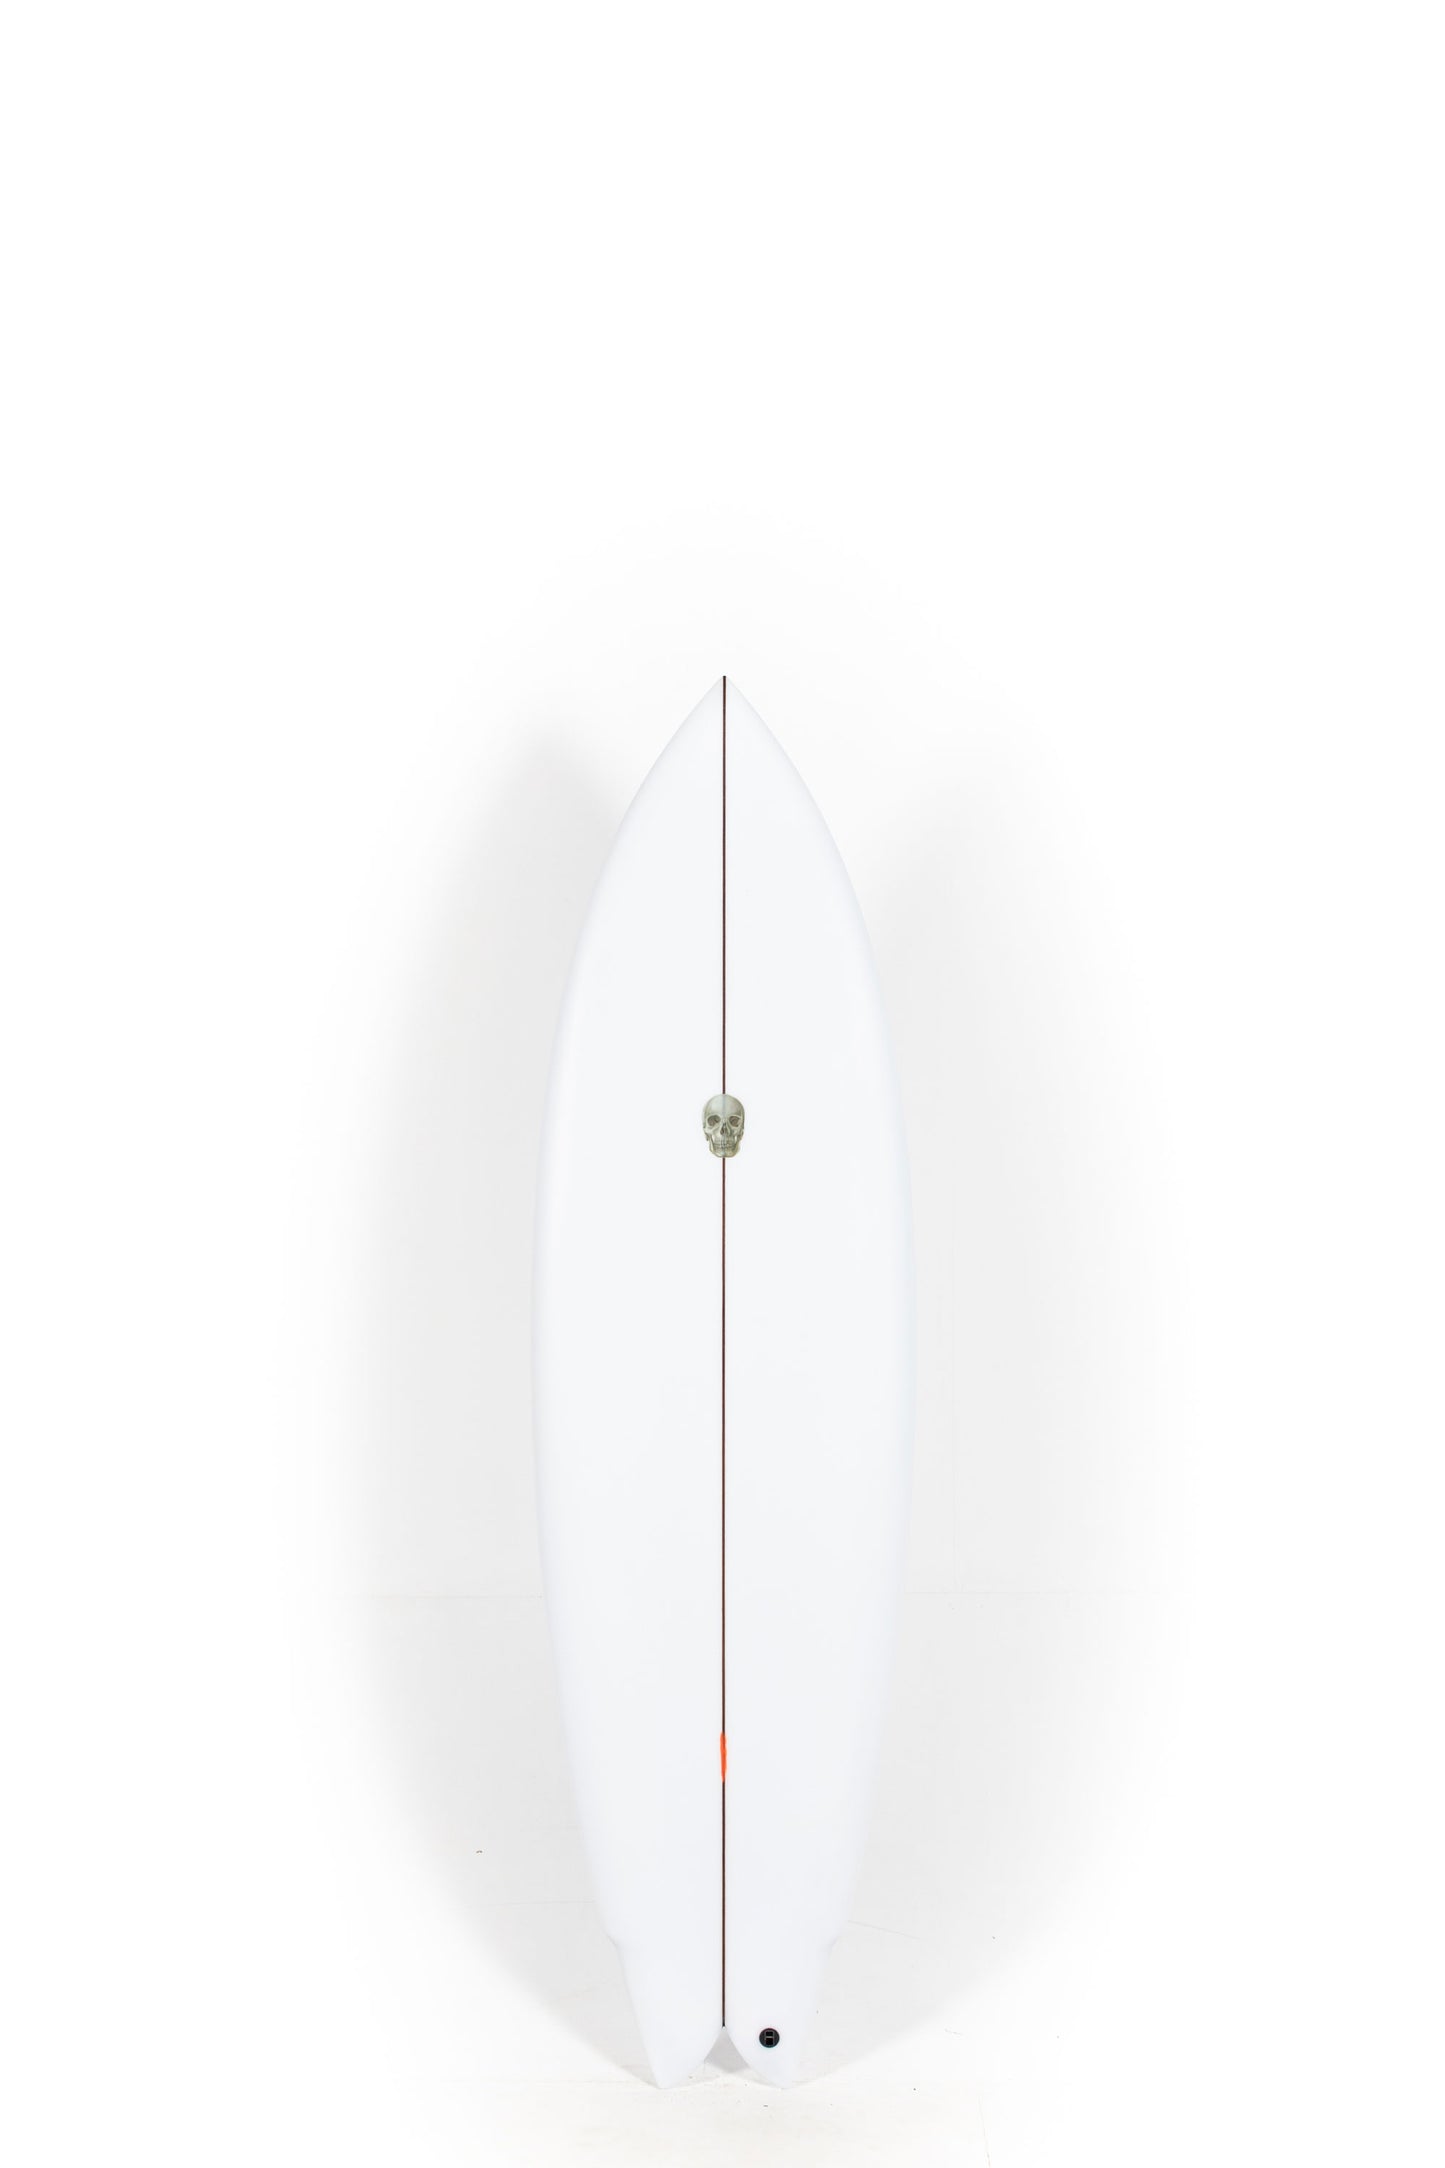 Pukas Surf Shop - Christenson Surfboard  - WOLVERINE by Chris Christenson - 6’2 x 20 1/2 x 2 1/2 - CX05370